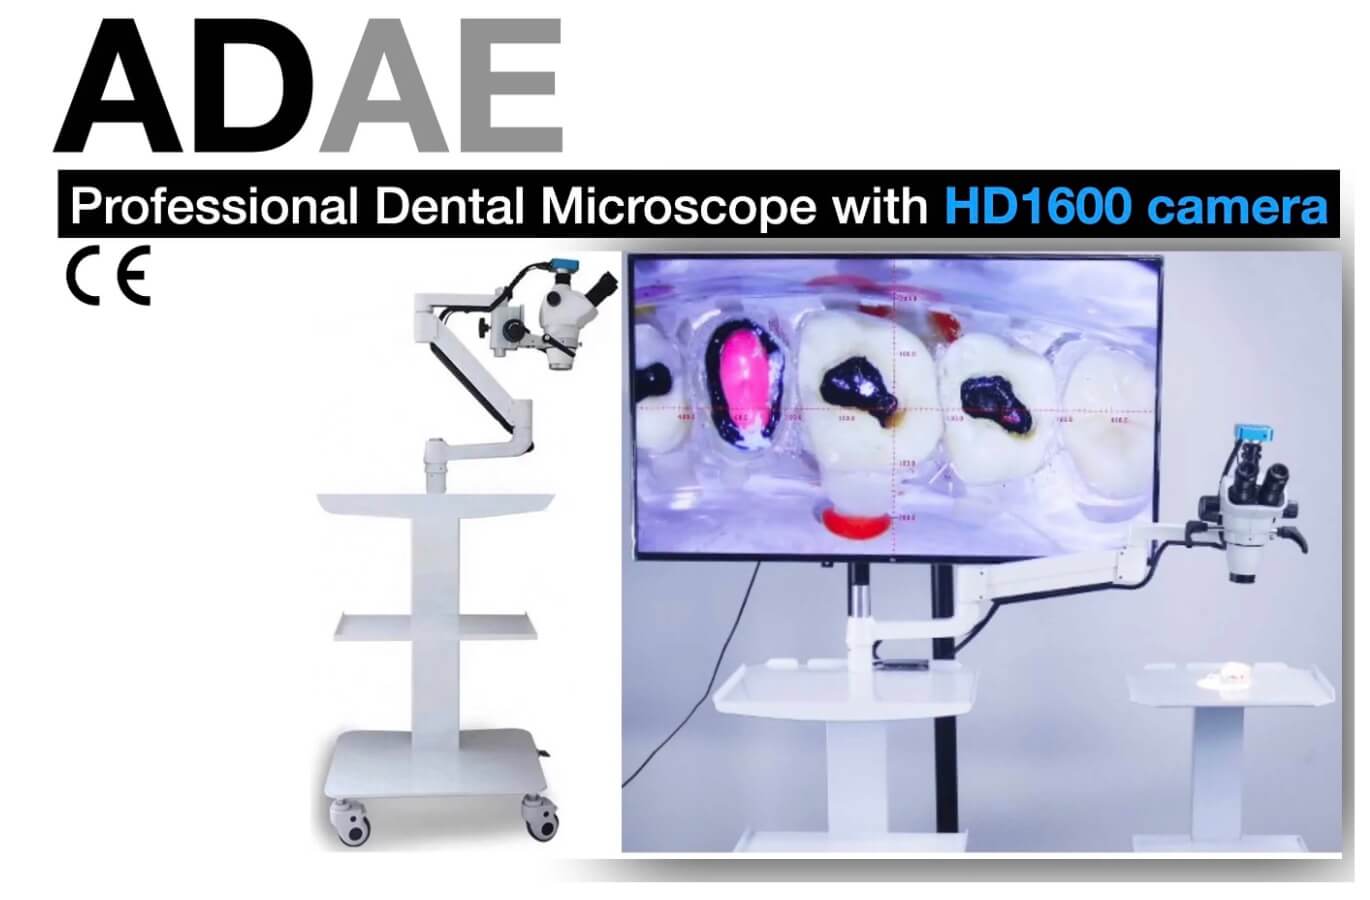 Professional dental microscope